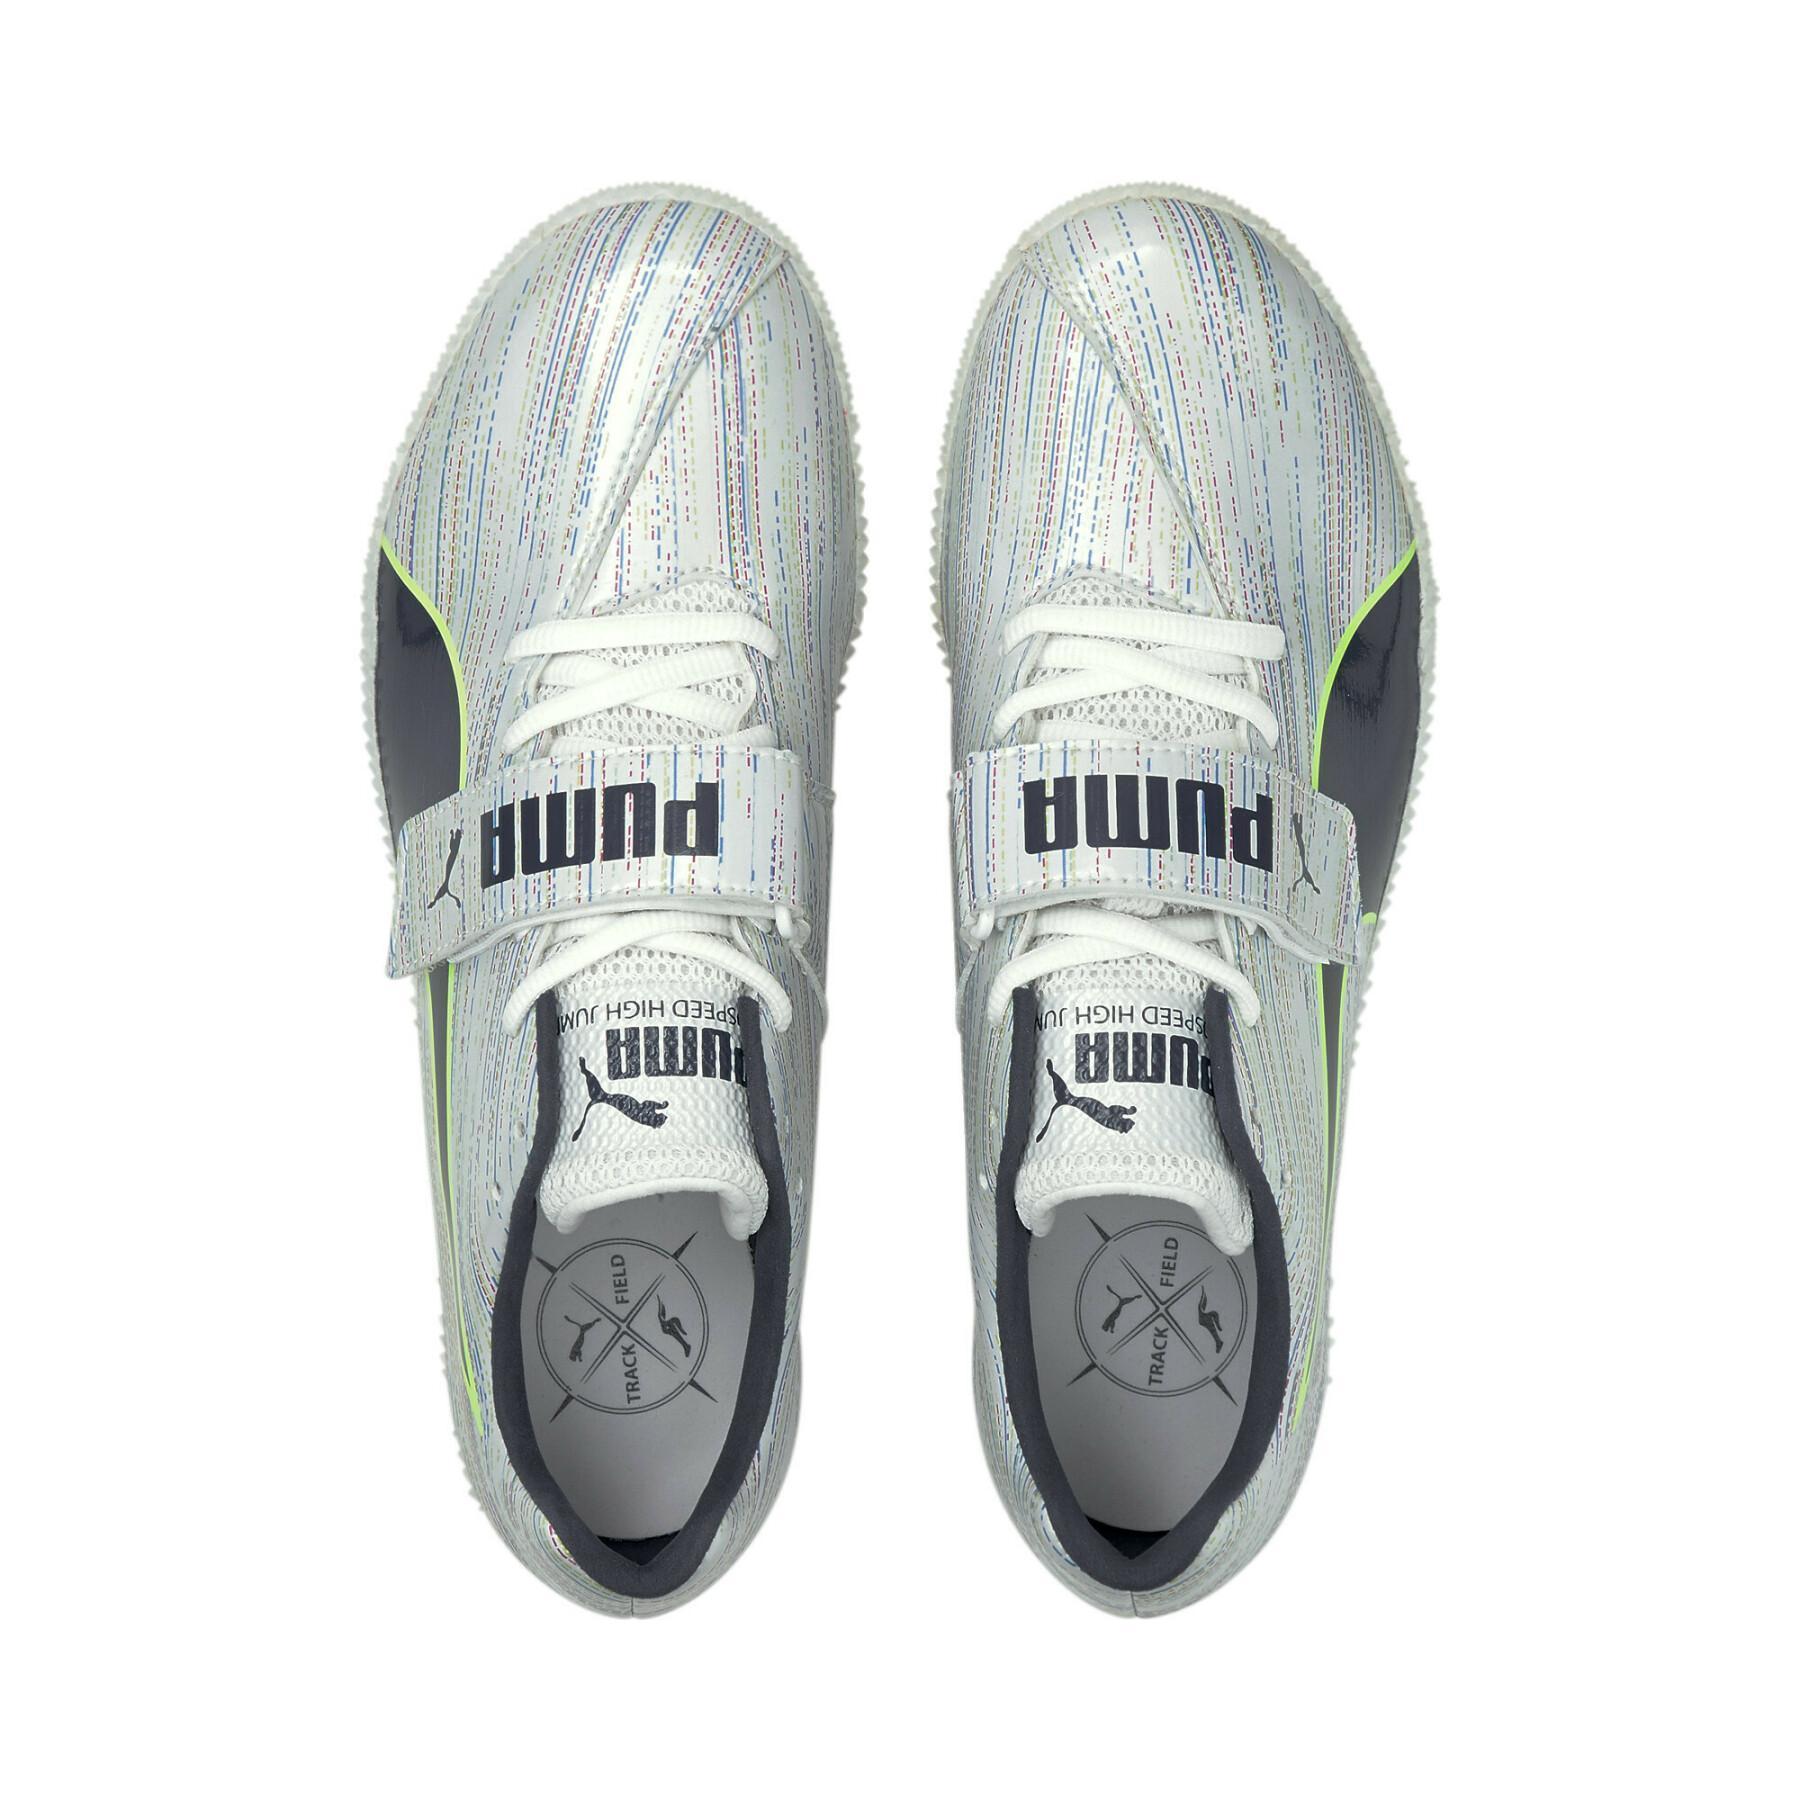 Zapatos Puma evoSPEED High Jump 8 SP